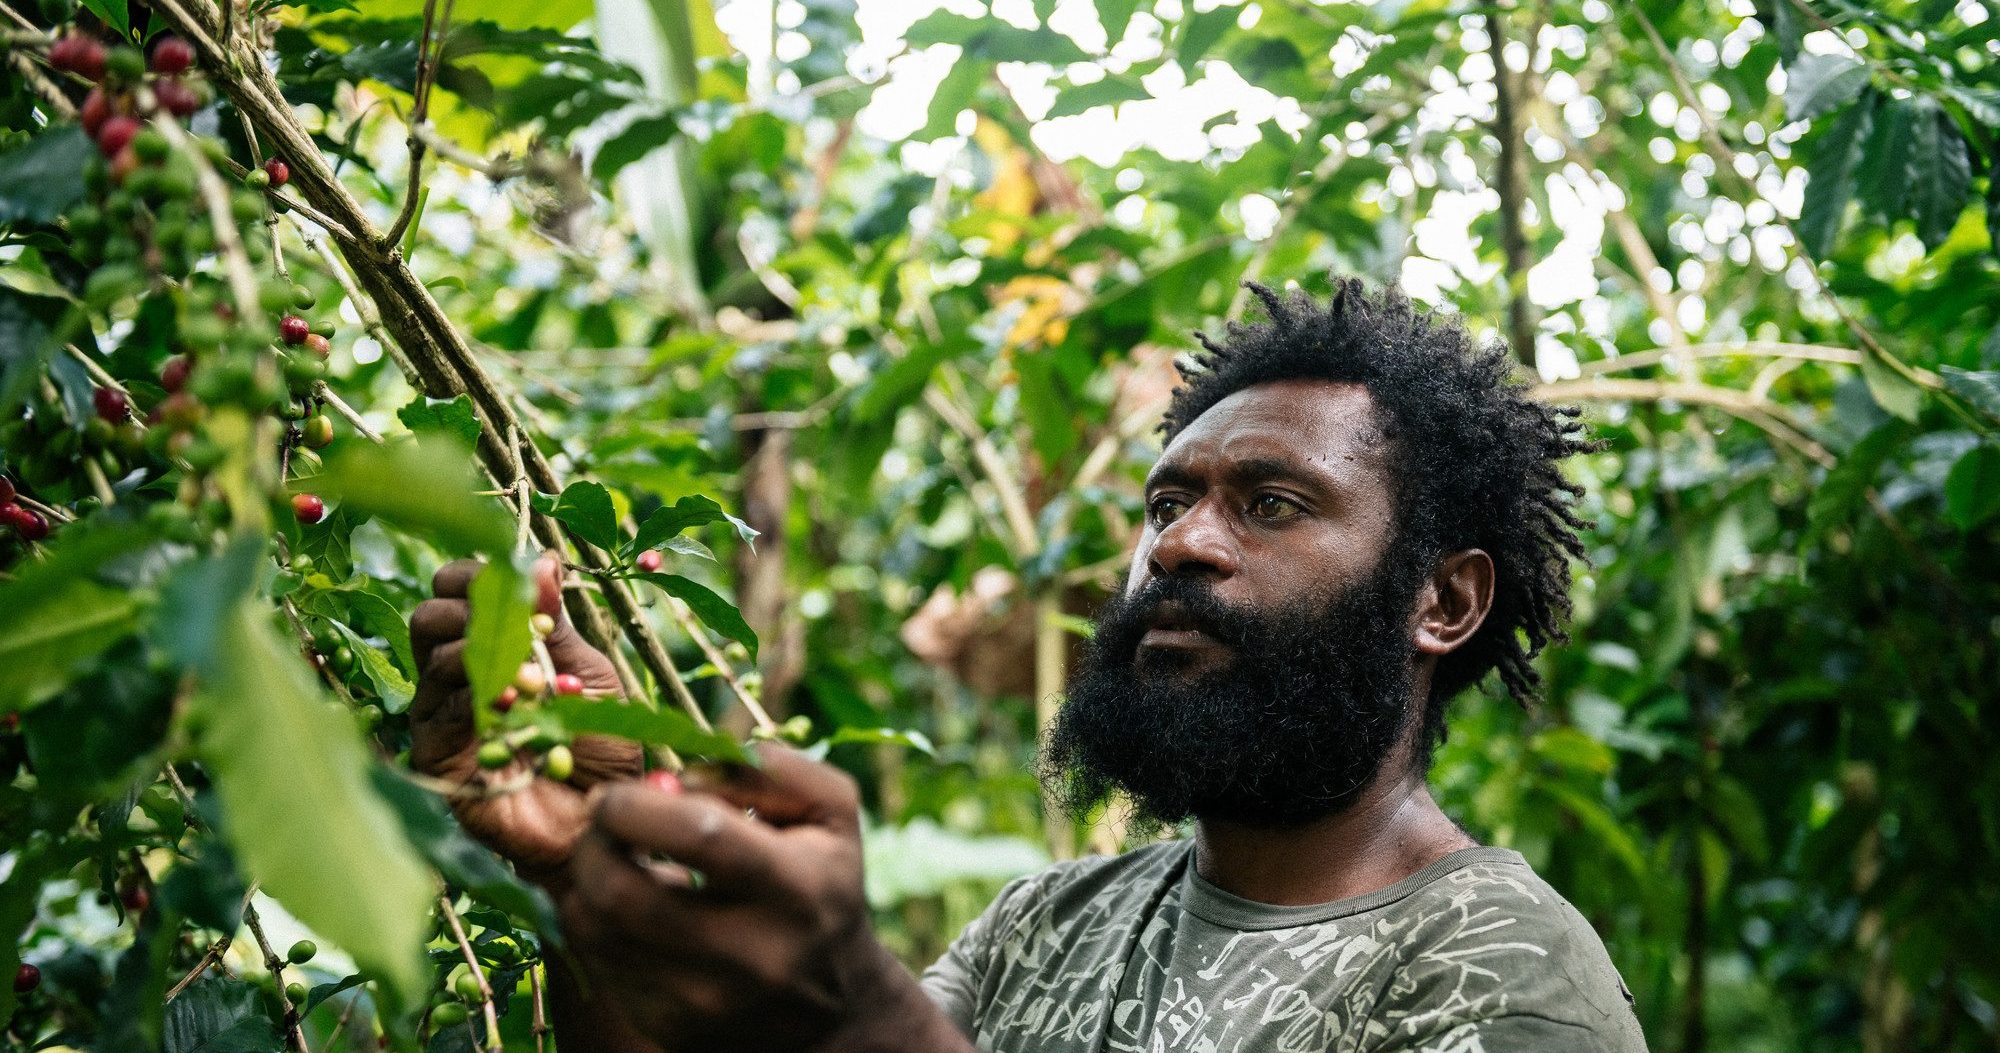 Farmer in Papua New Guinea picks coffee cherries at his Fairtrade certified farm.